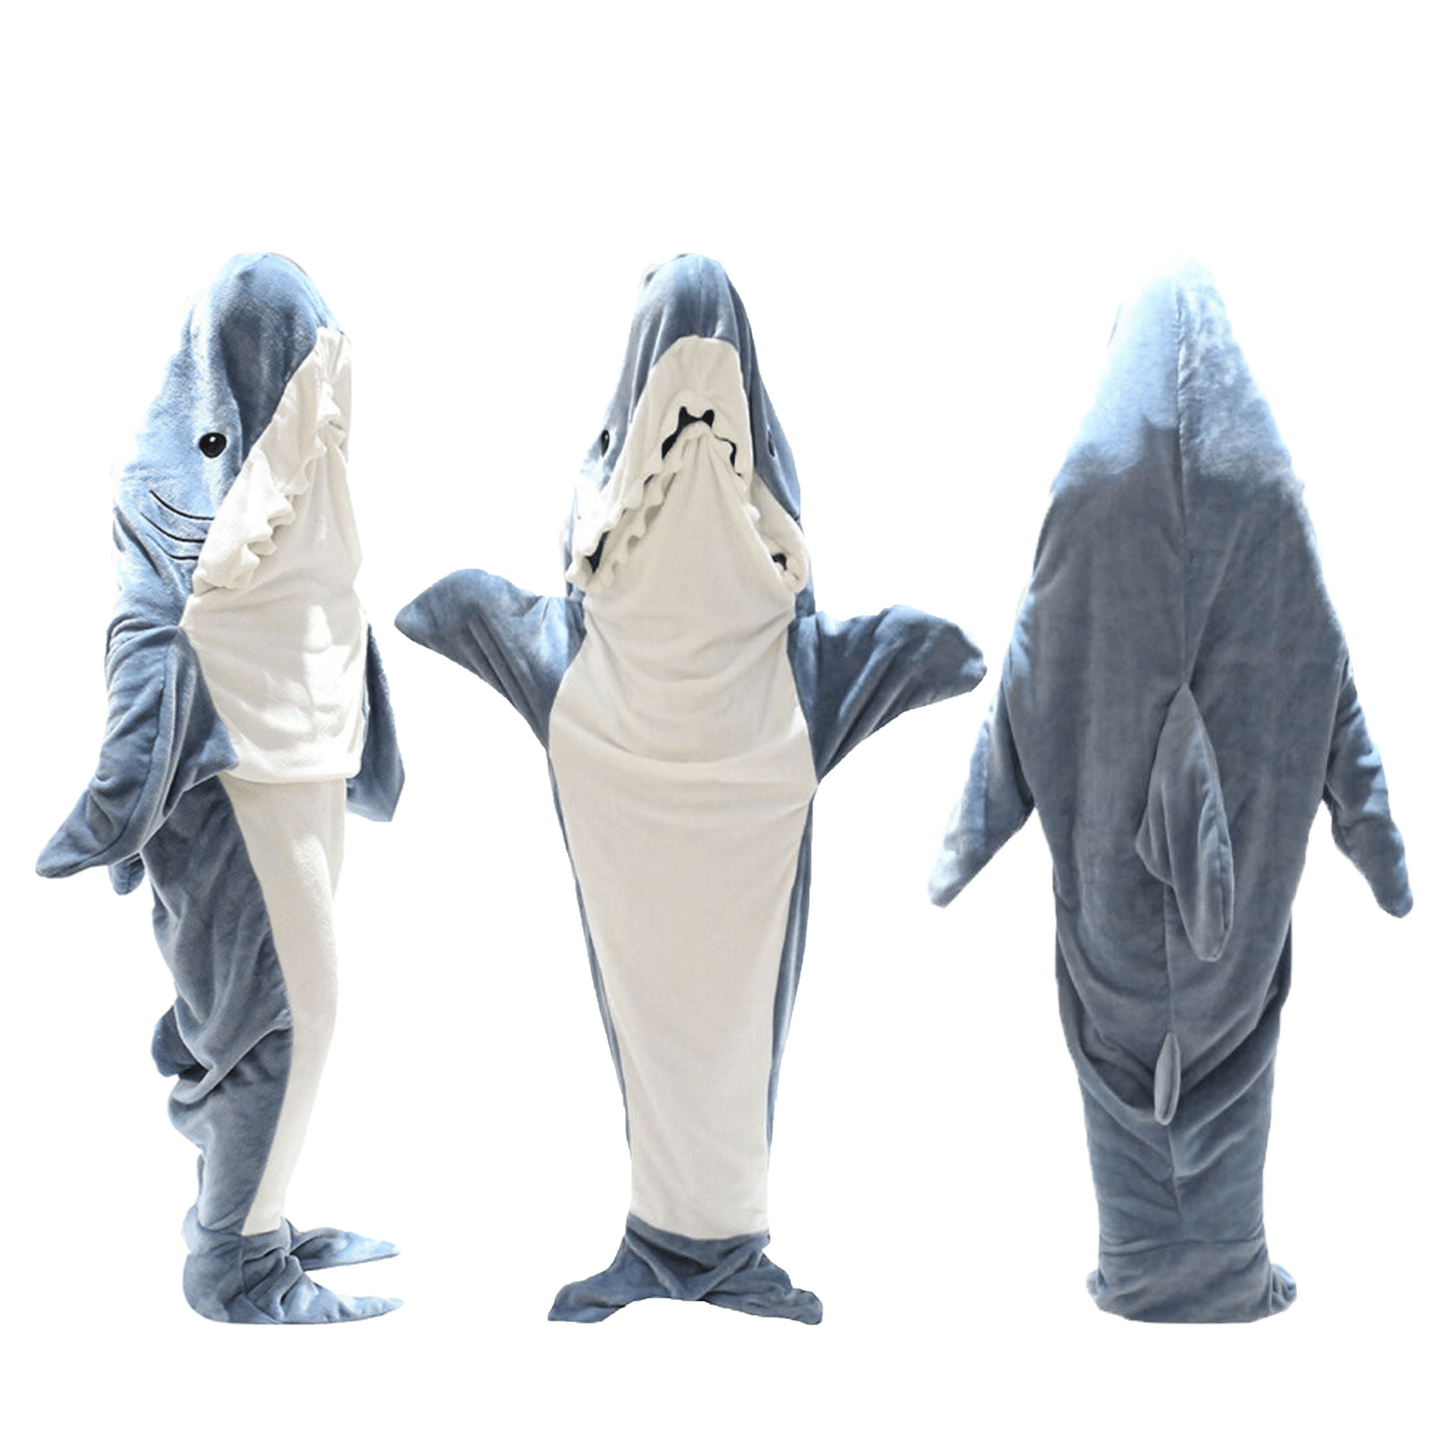 Shark Blanket Sleeping Bag For Adults Wearable Onesie LARGE / X-LARGE OLIVIA ROCCO Hooded Blanket